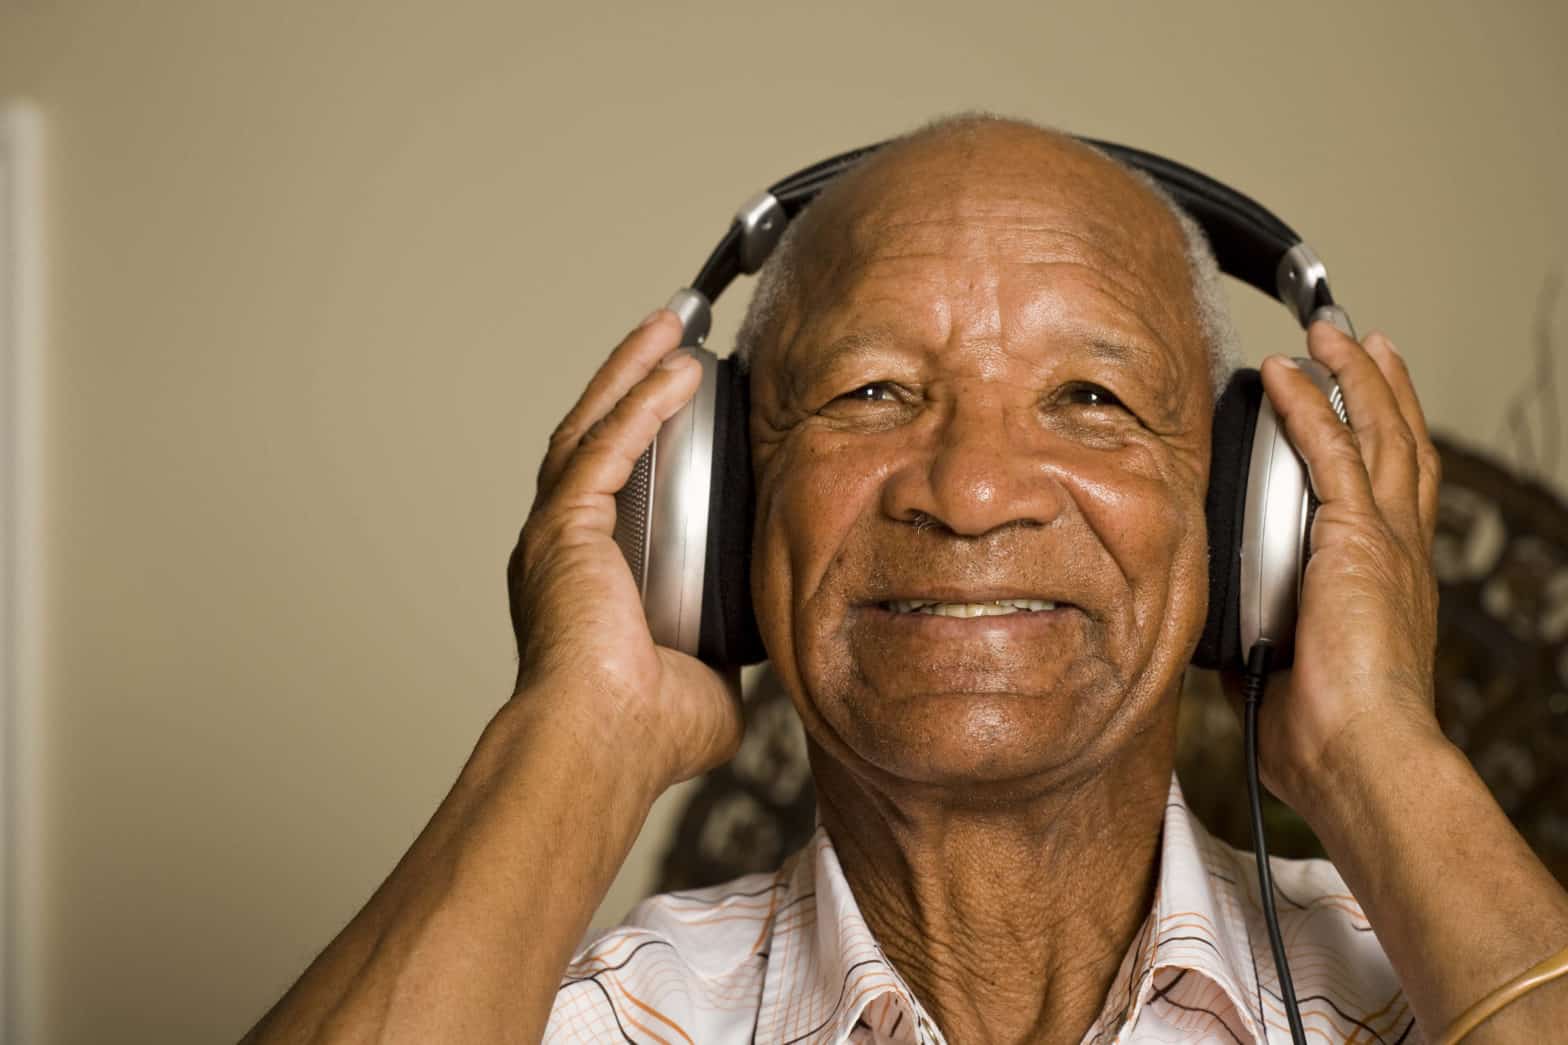 Senior man listening to headphones